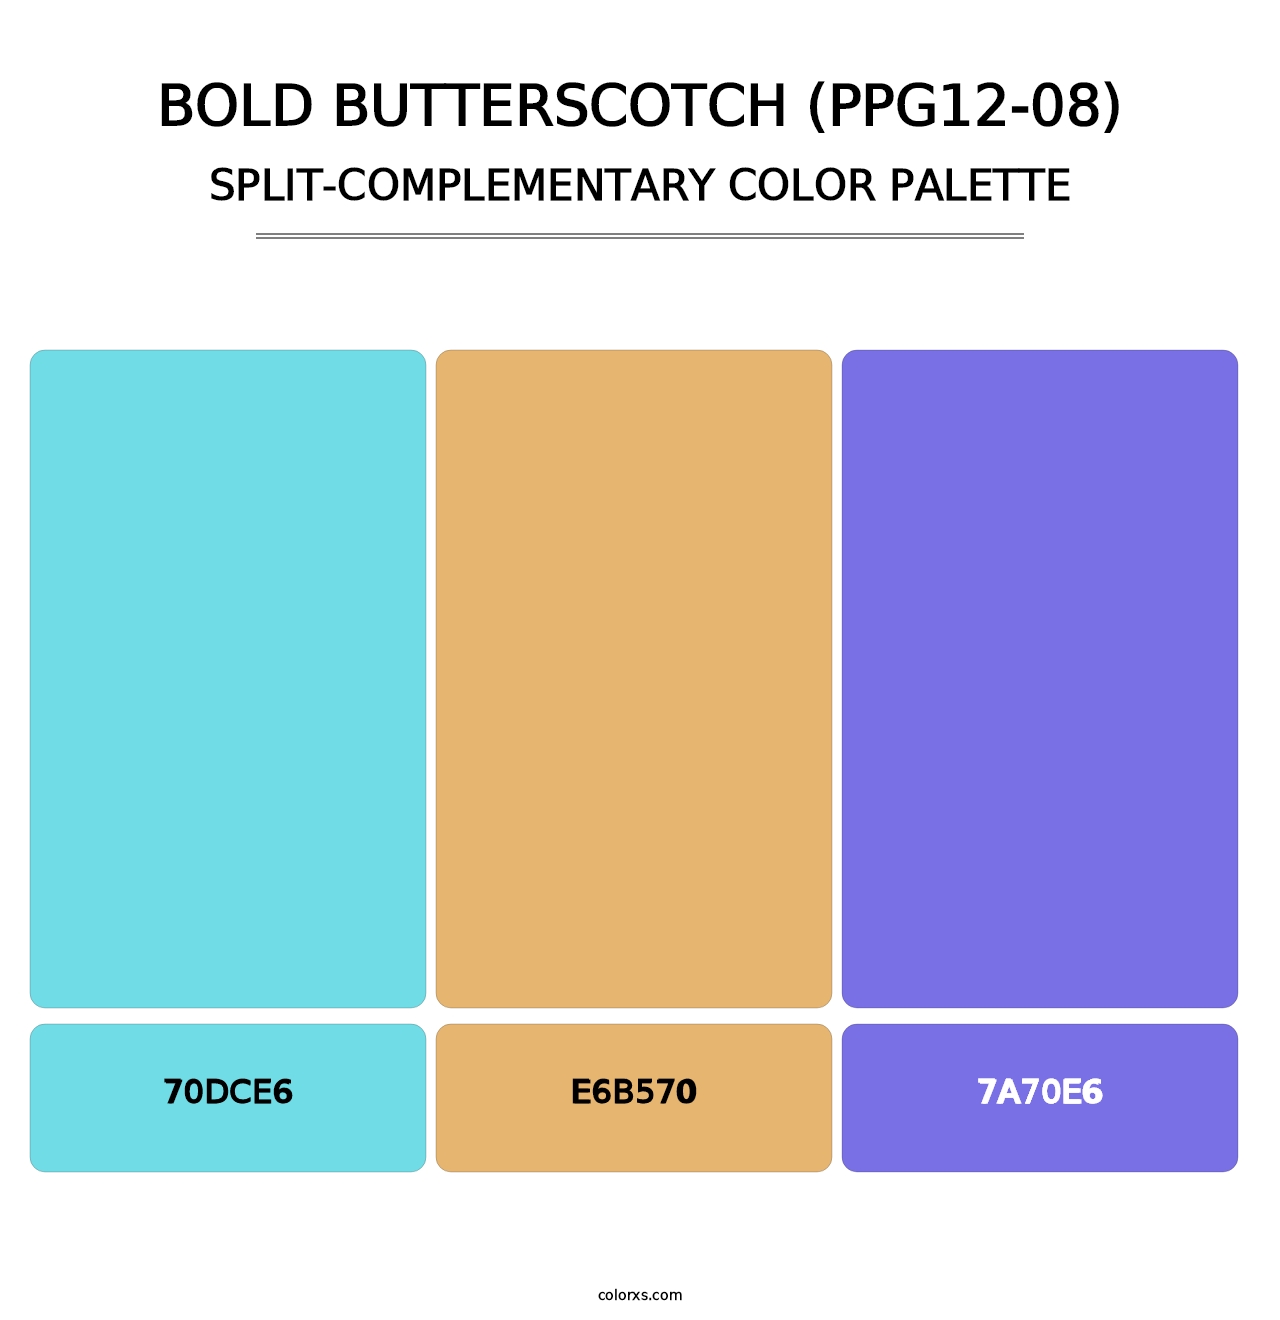 Bold Butterscotch (PPG12-08) - Split-Complementary Color Palette